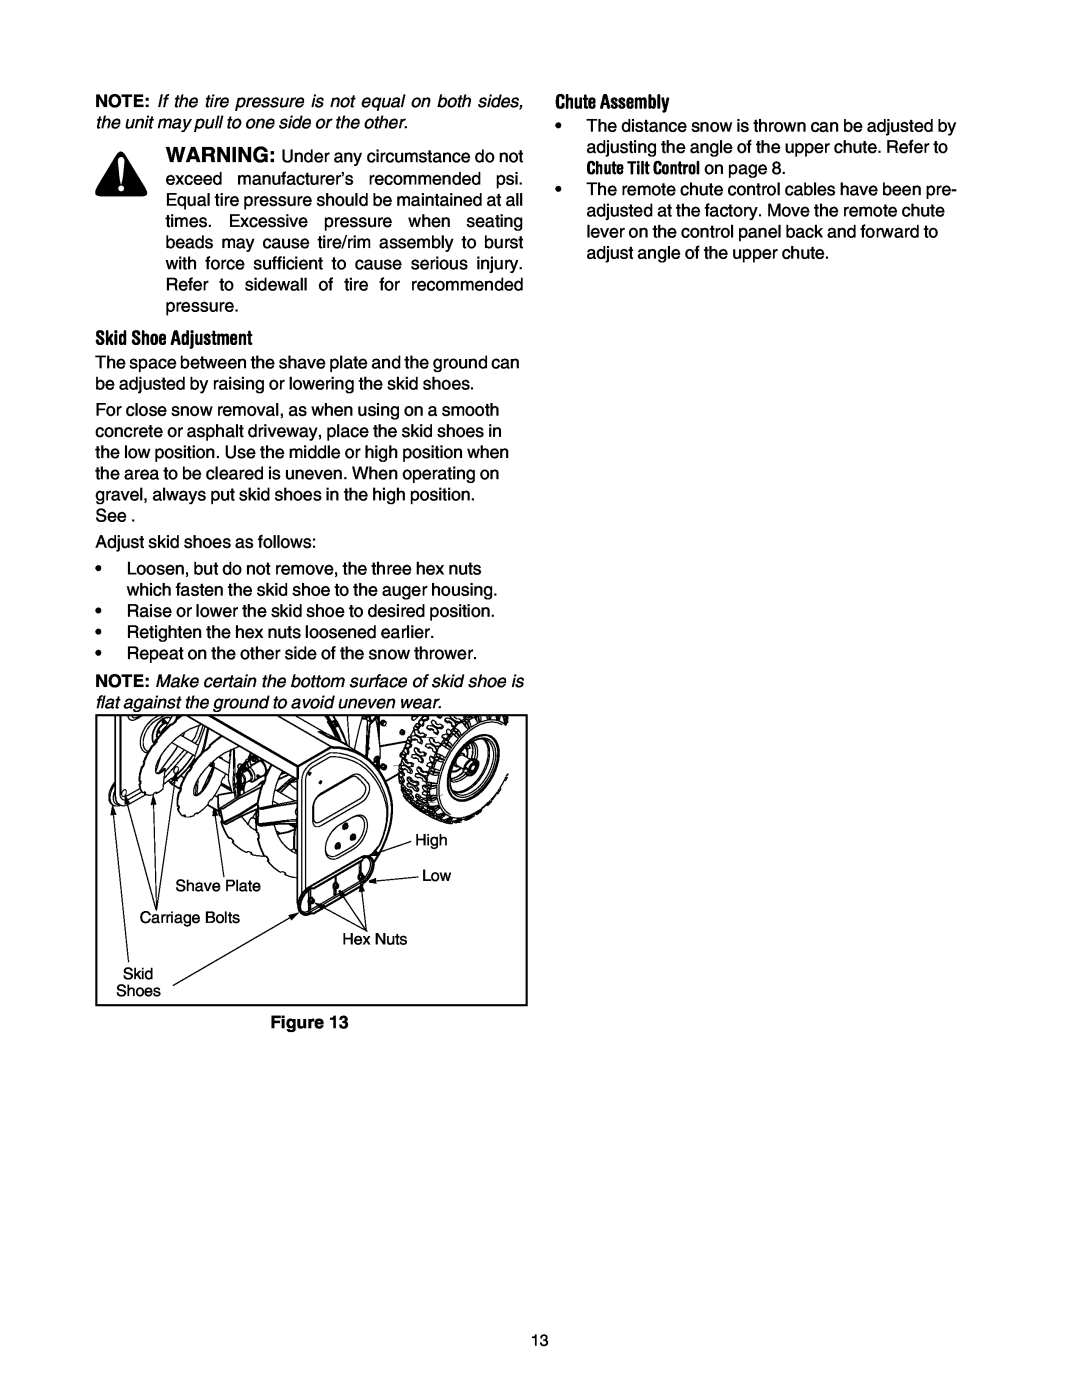 Troy-Bilt 10530 manual Skid Shoe Adjustment, Chute Assembly, Chute Tilt Control on page 